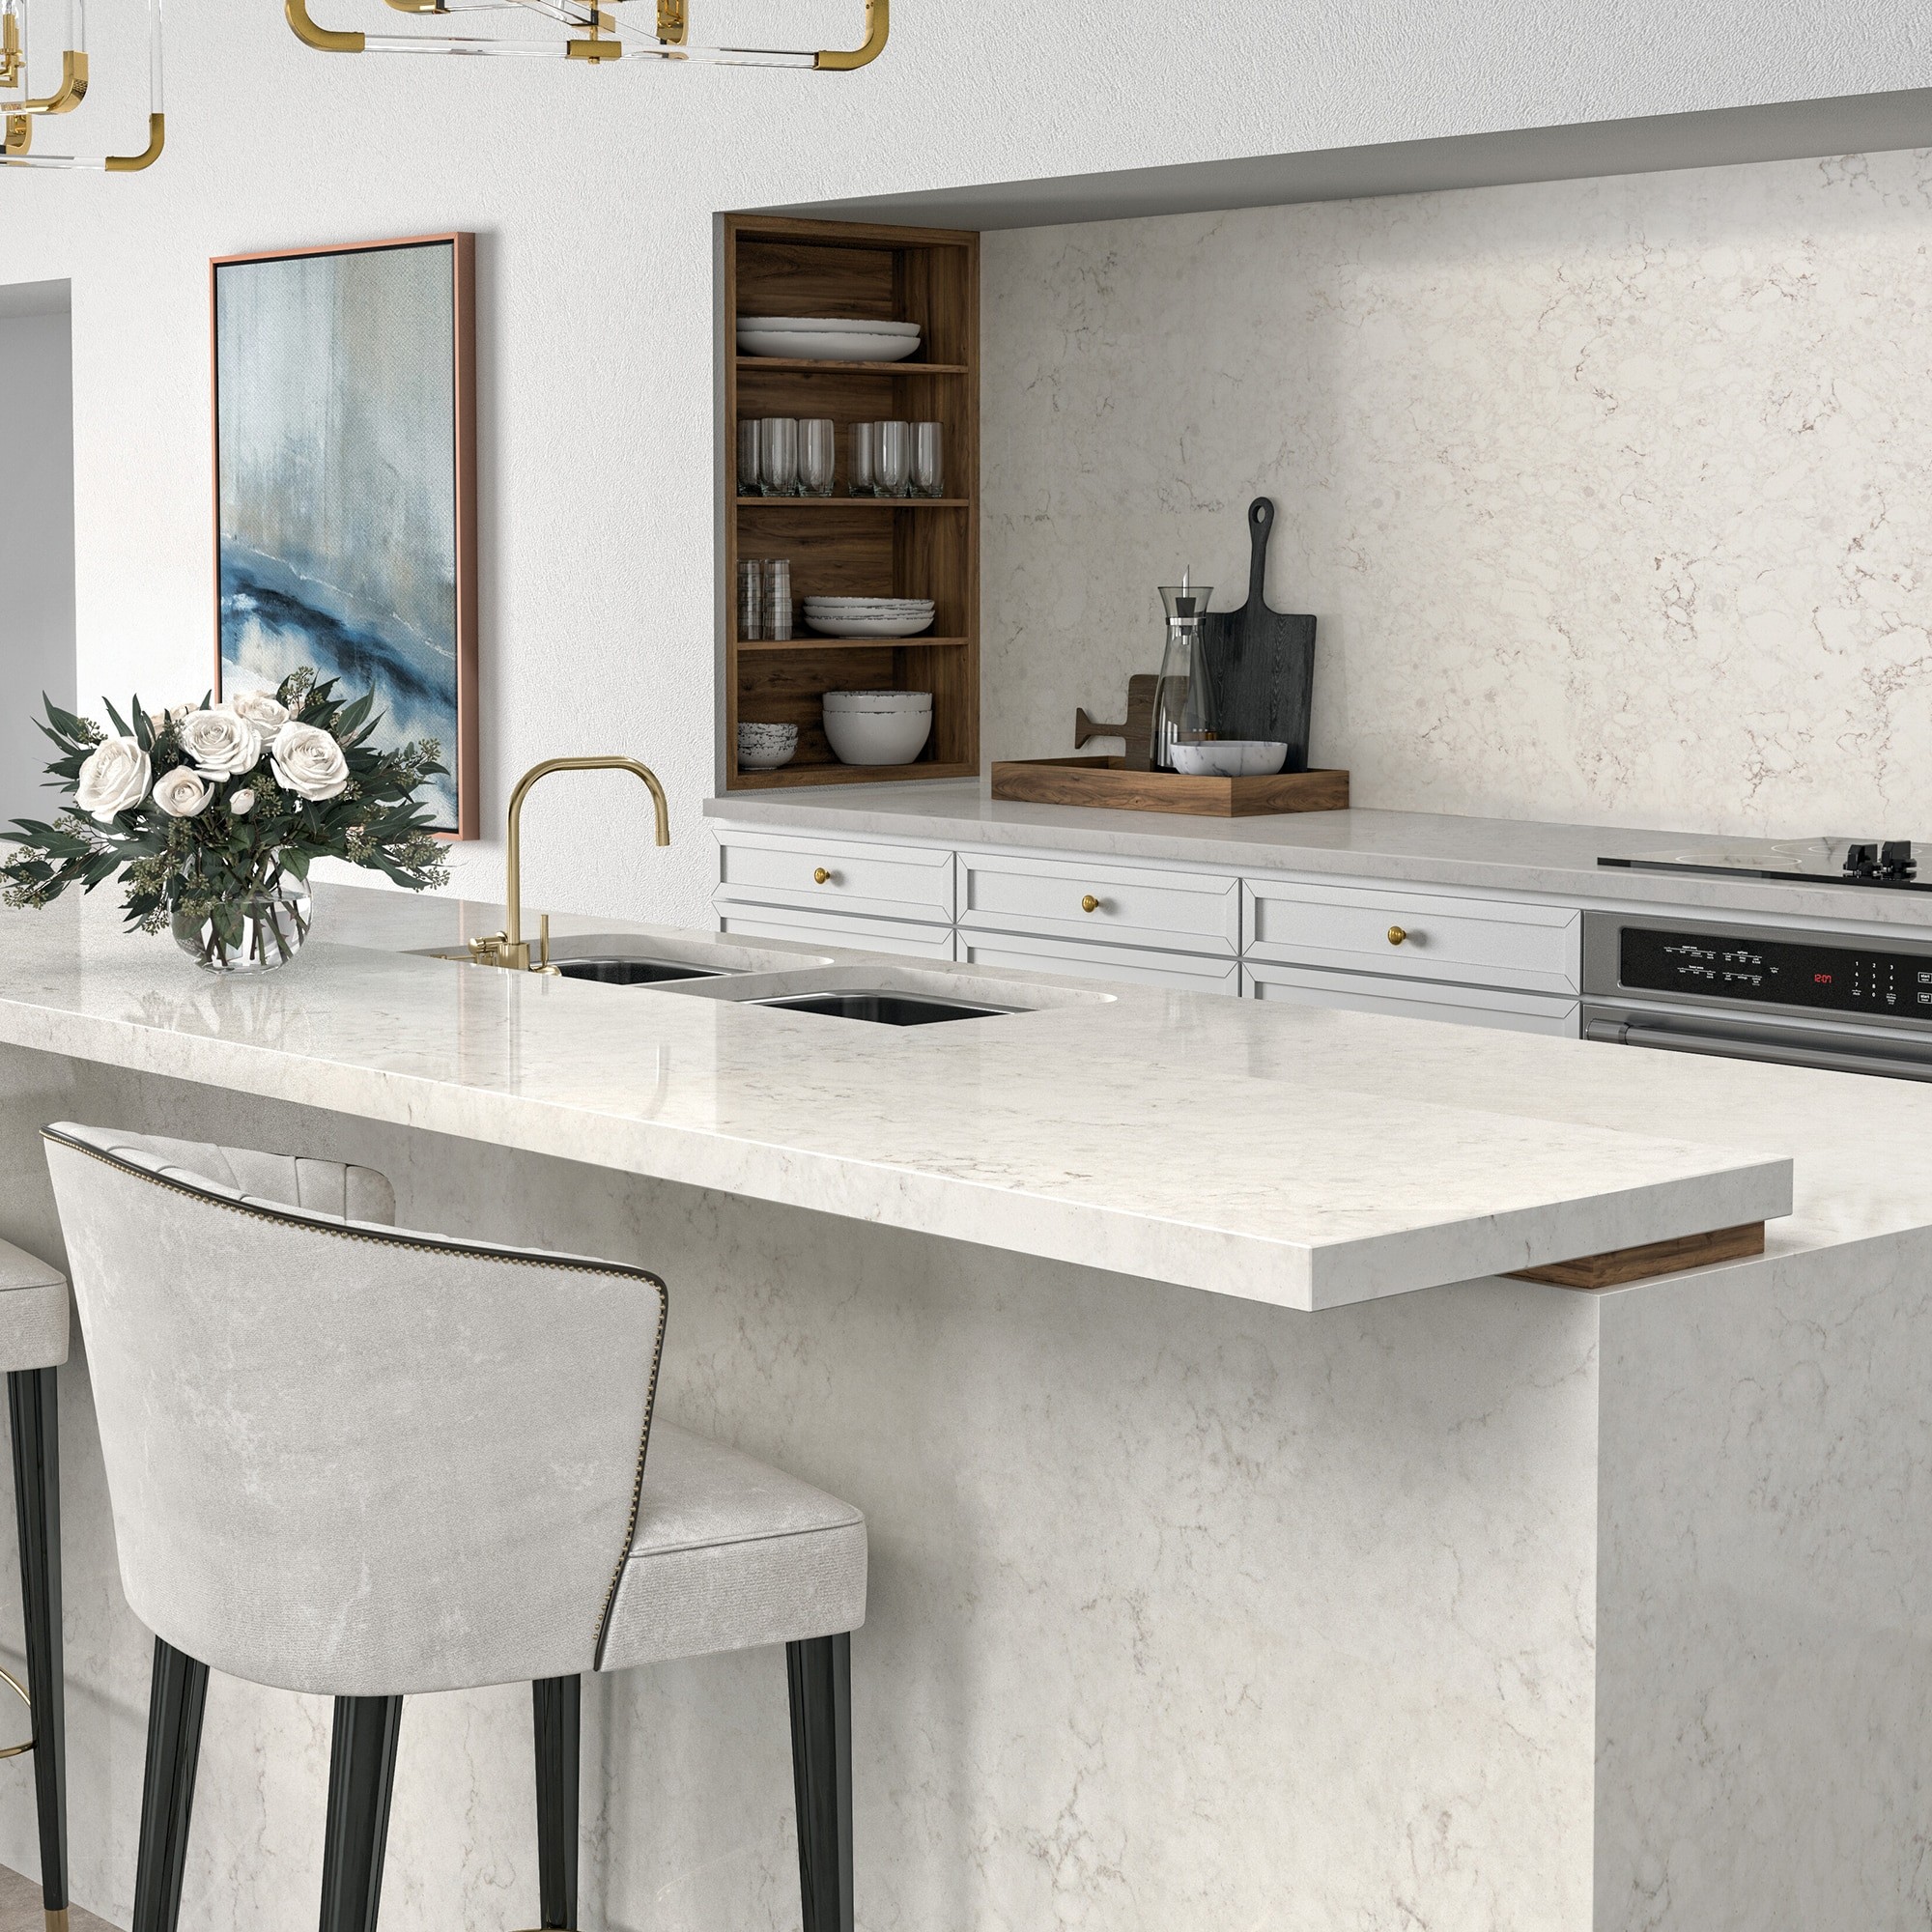 white modern, sleek kitchen with countertop bar around sink | GMD Surfaces in Chicagoland and Northwest Indiana